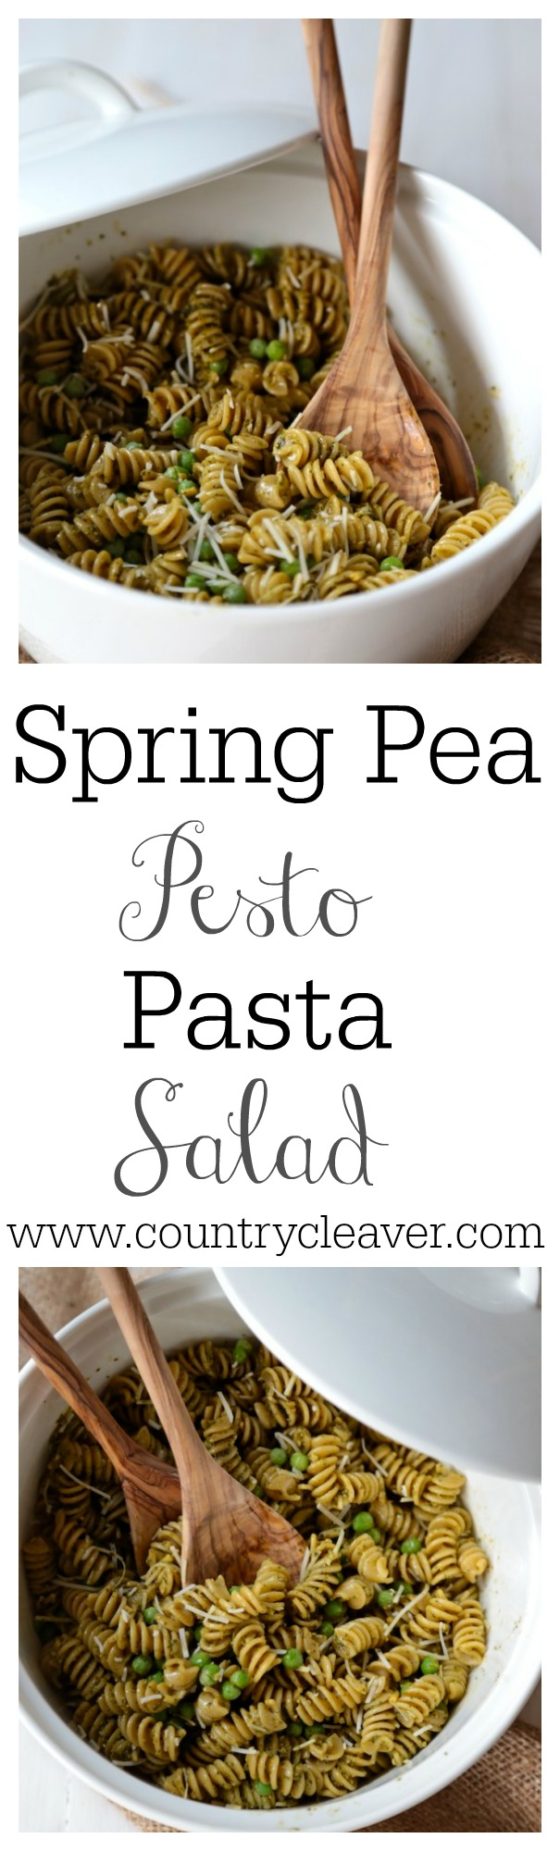 Spring Pea Pesto Pasta Salad